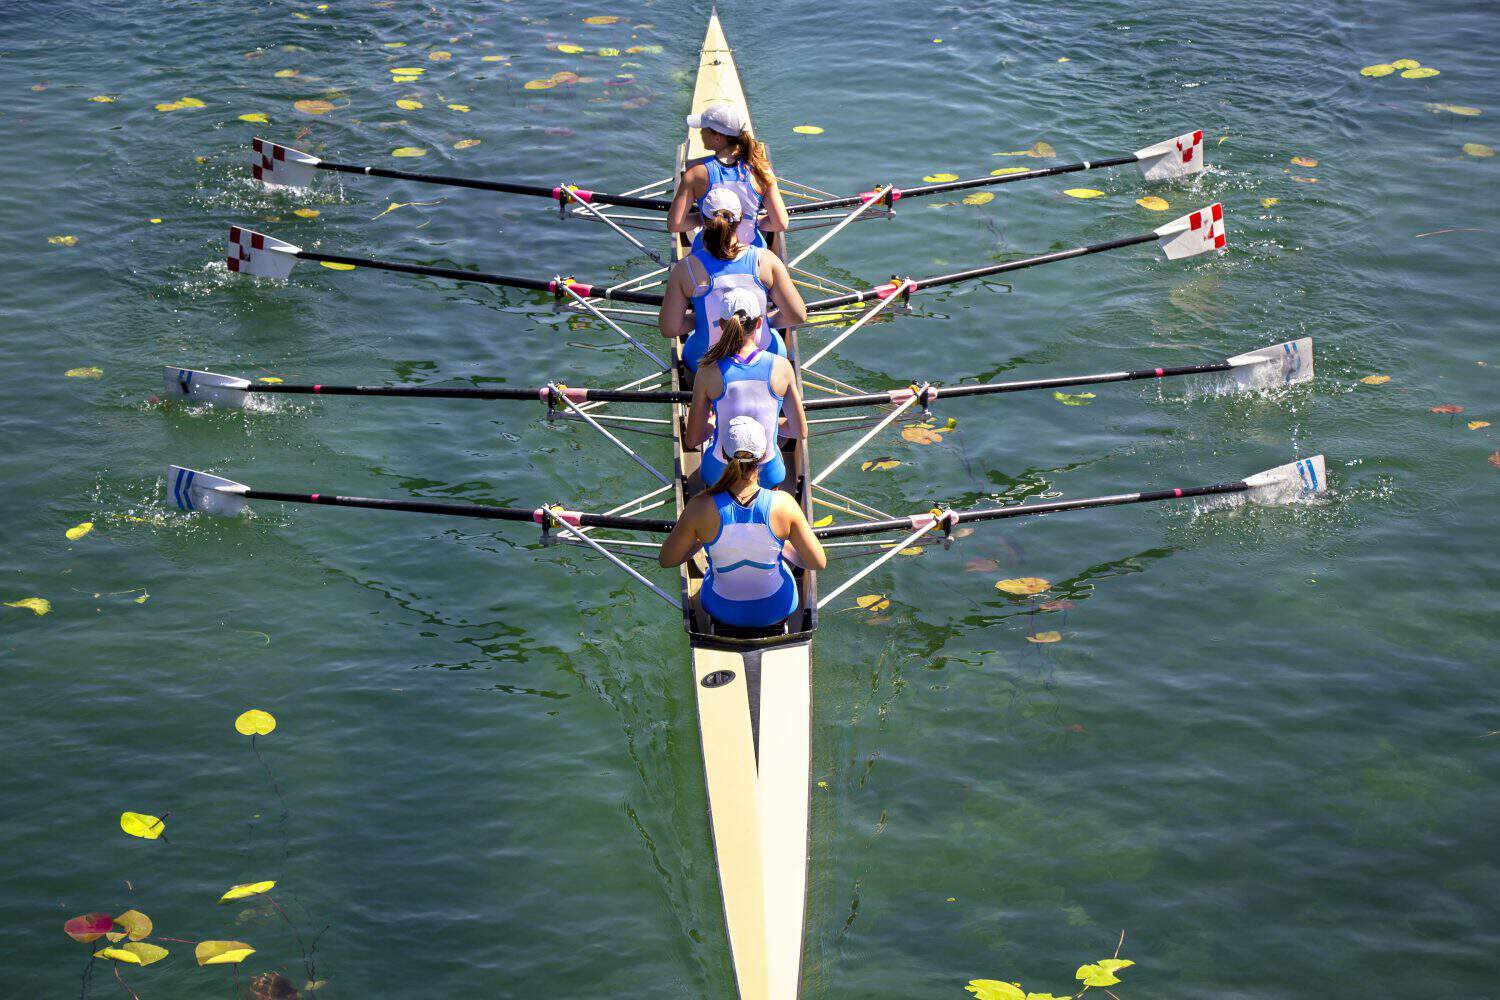 Women's quadruple rowing team on turquoise green lake